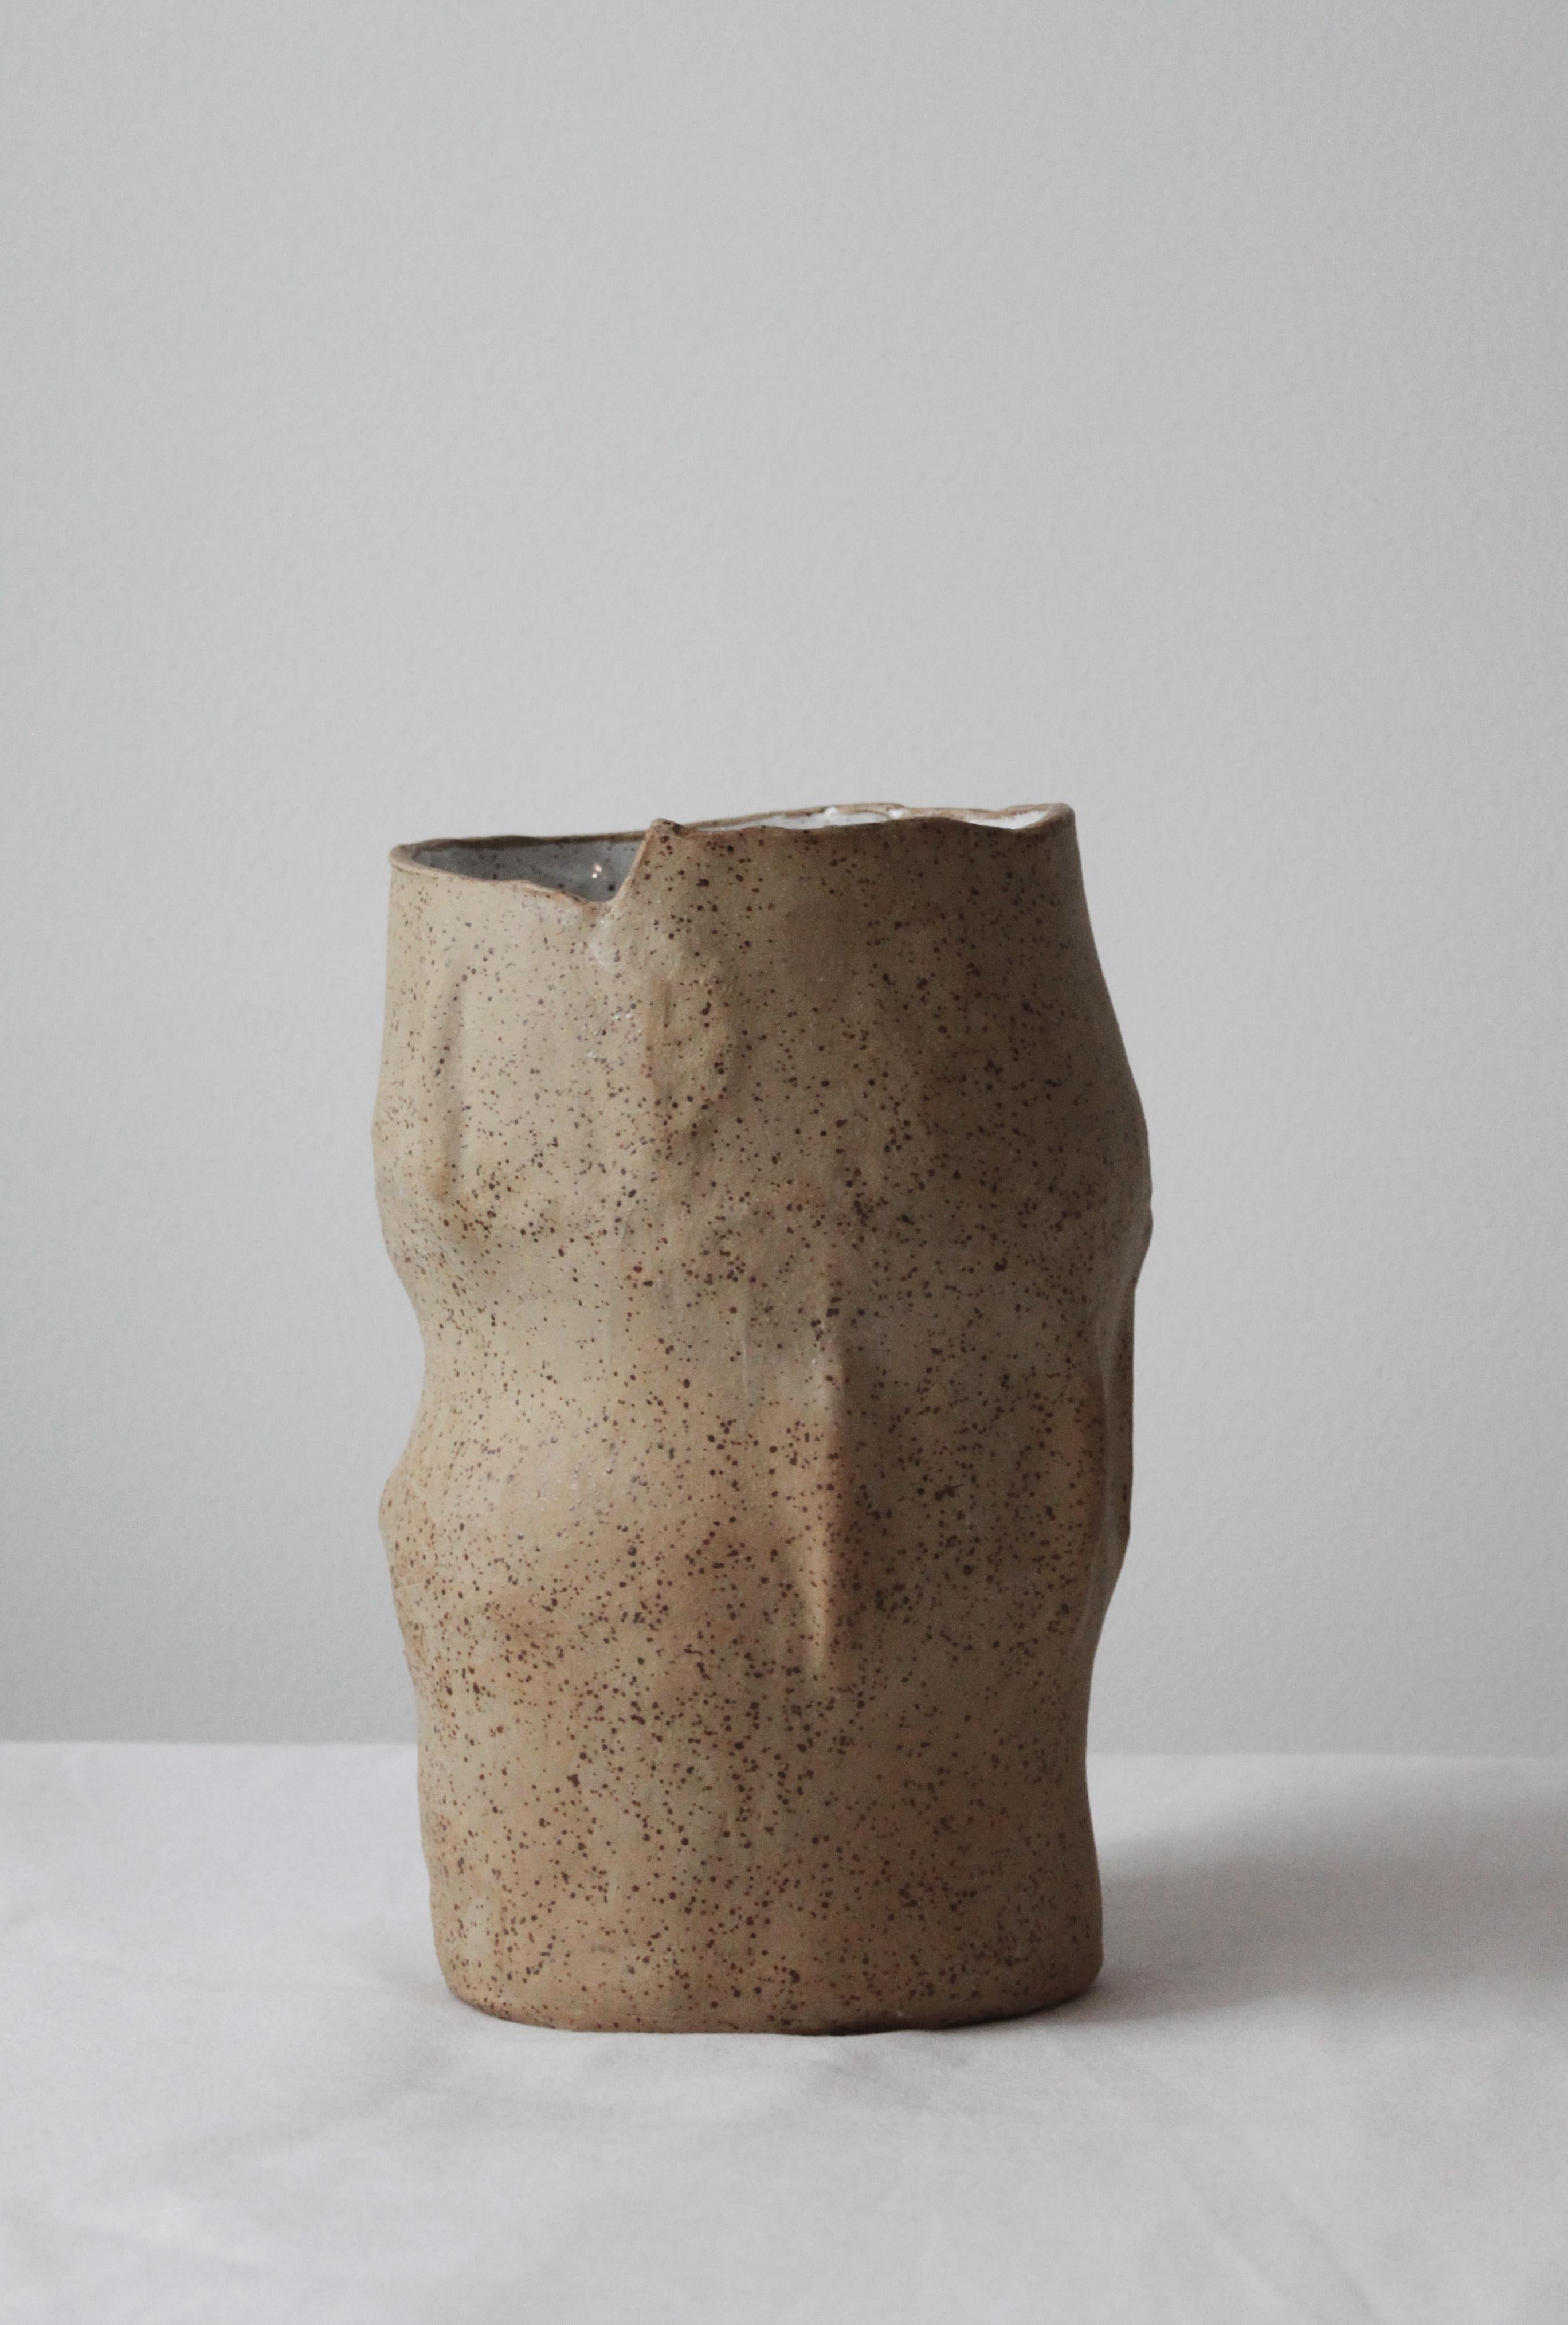 Amorphia vase by lava Studio ceramics.
Unique, 2020
Materials: Glazed stoneware
Dimensions: H 26 cm x D 16-15-17 cm

Lava ceramics is a collective studio based in Athens.